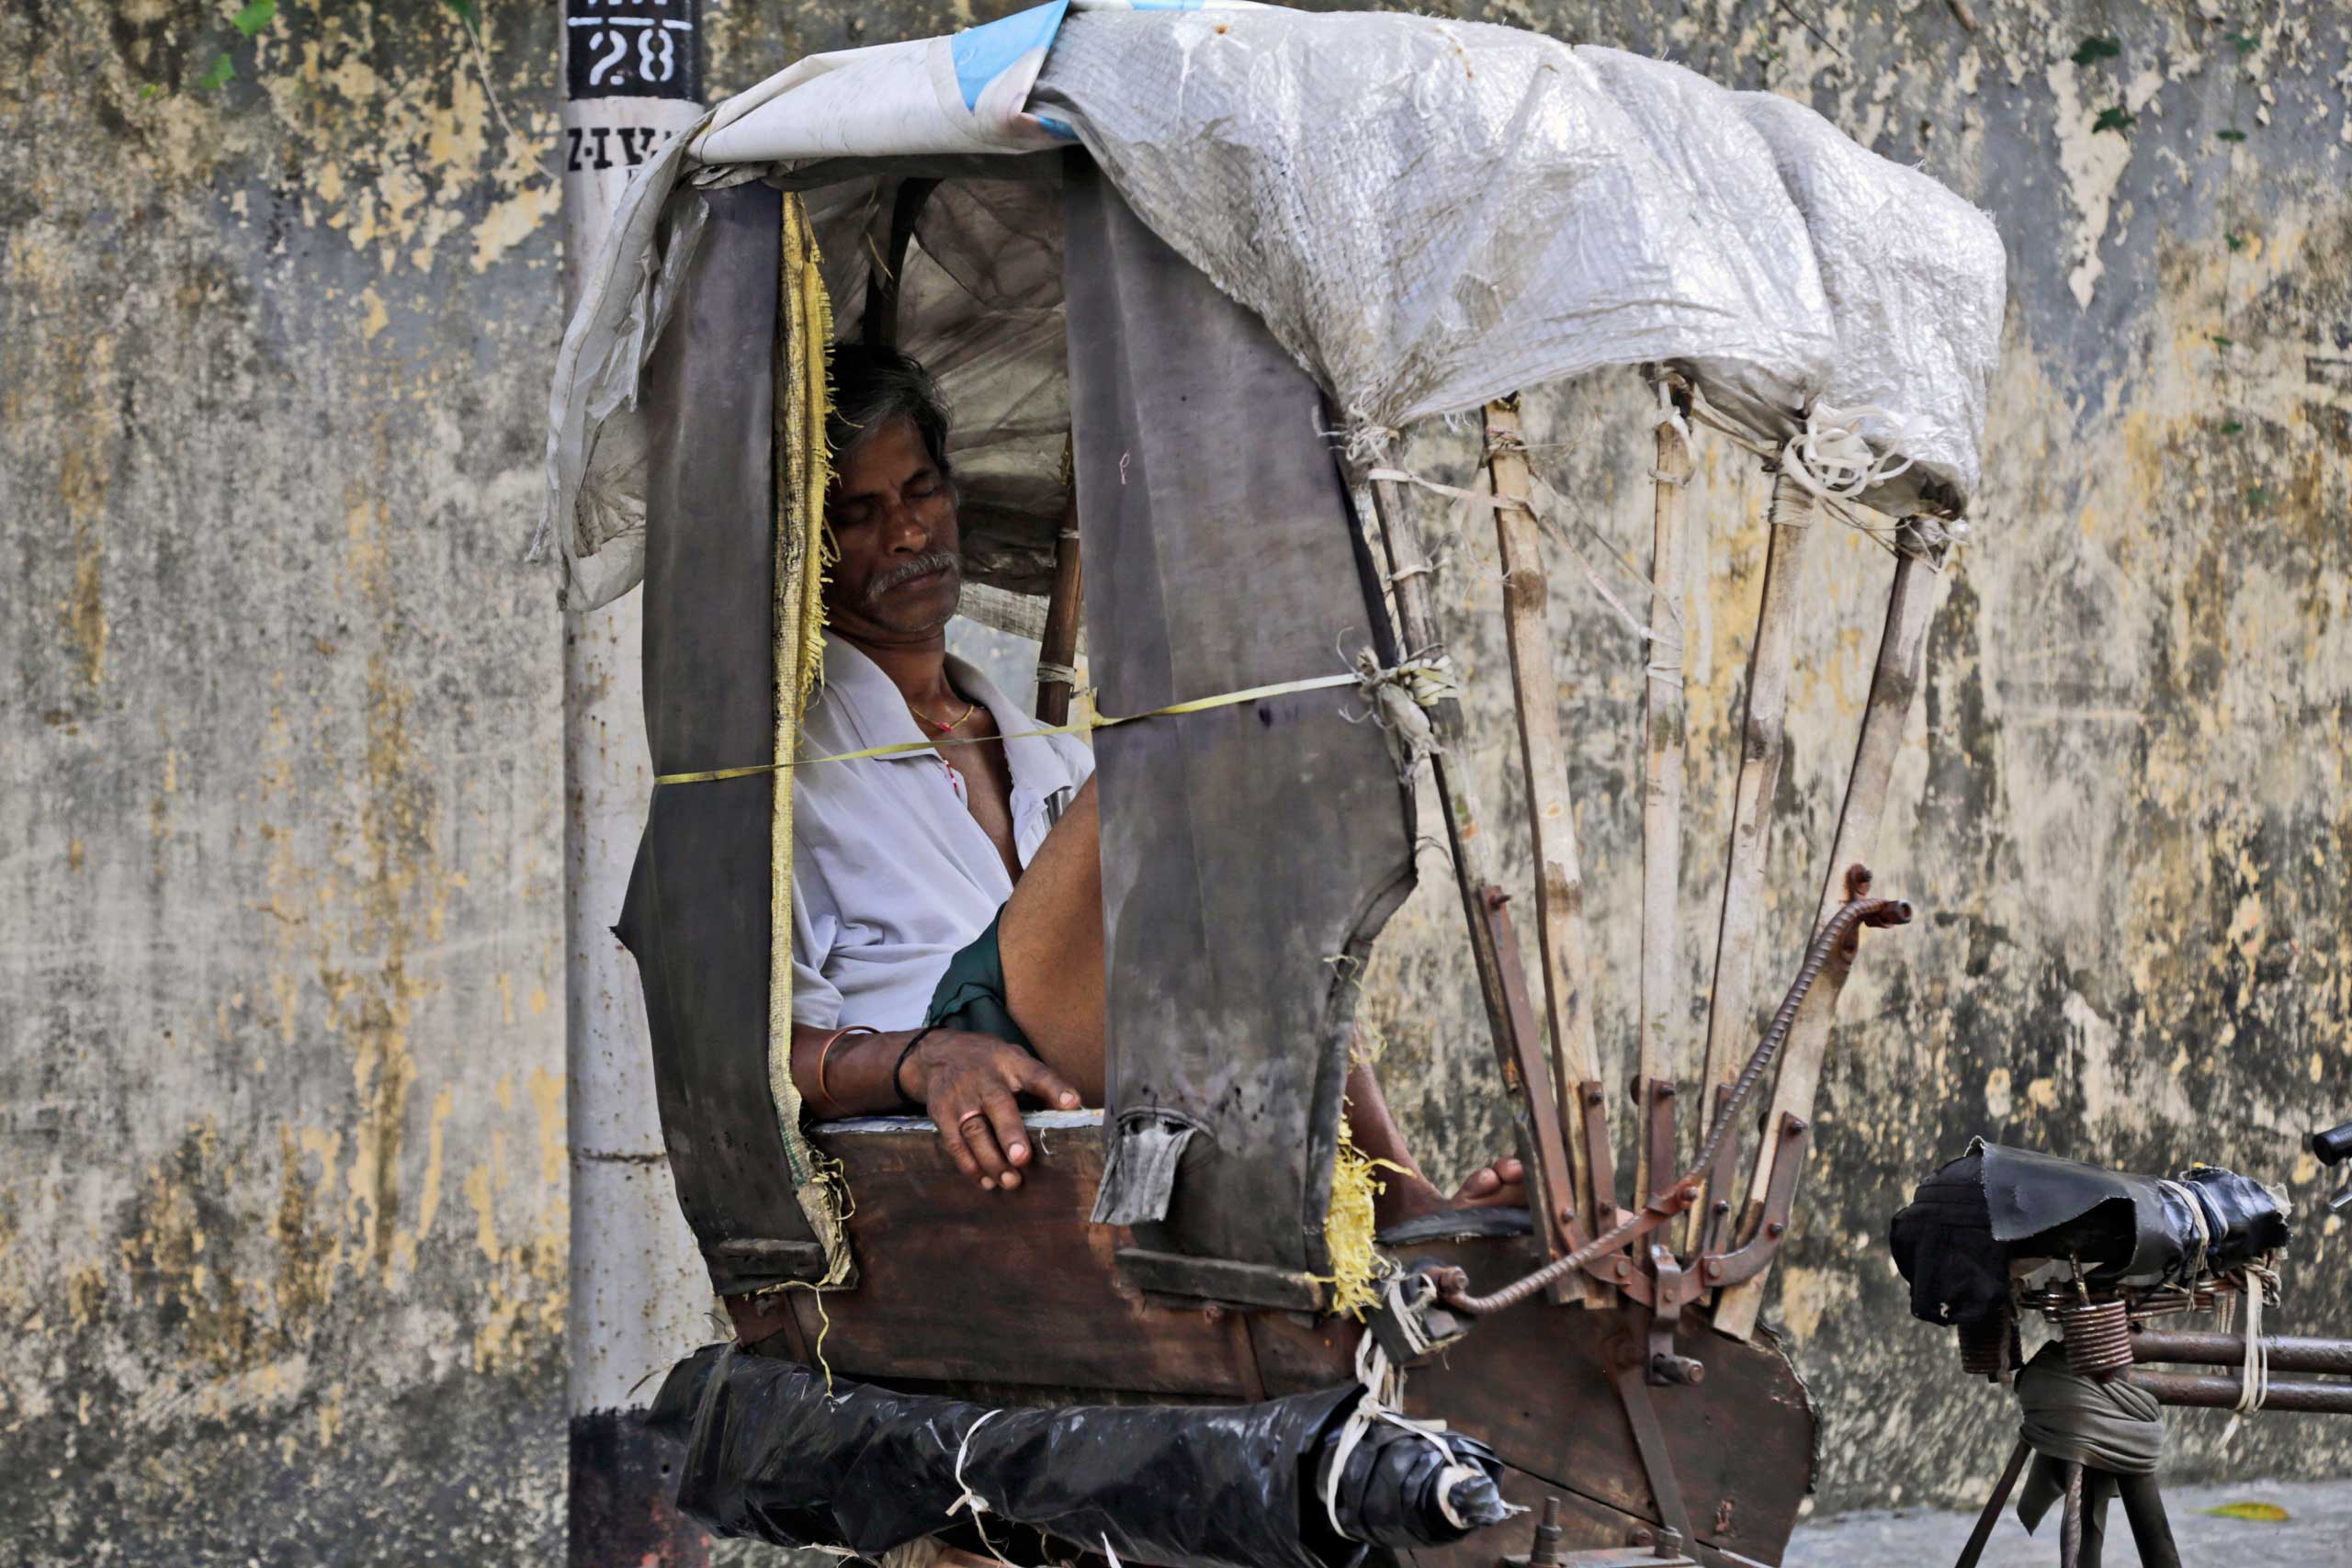 A rickshaw puller rests on a hot summer day in Kolkata, India on May 27, 2015.